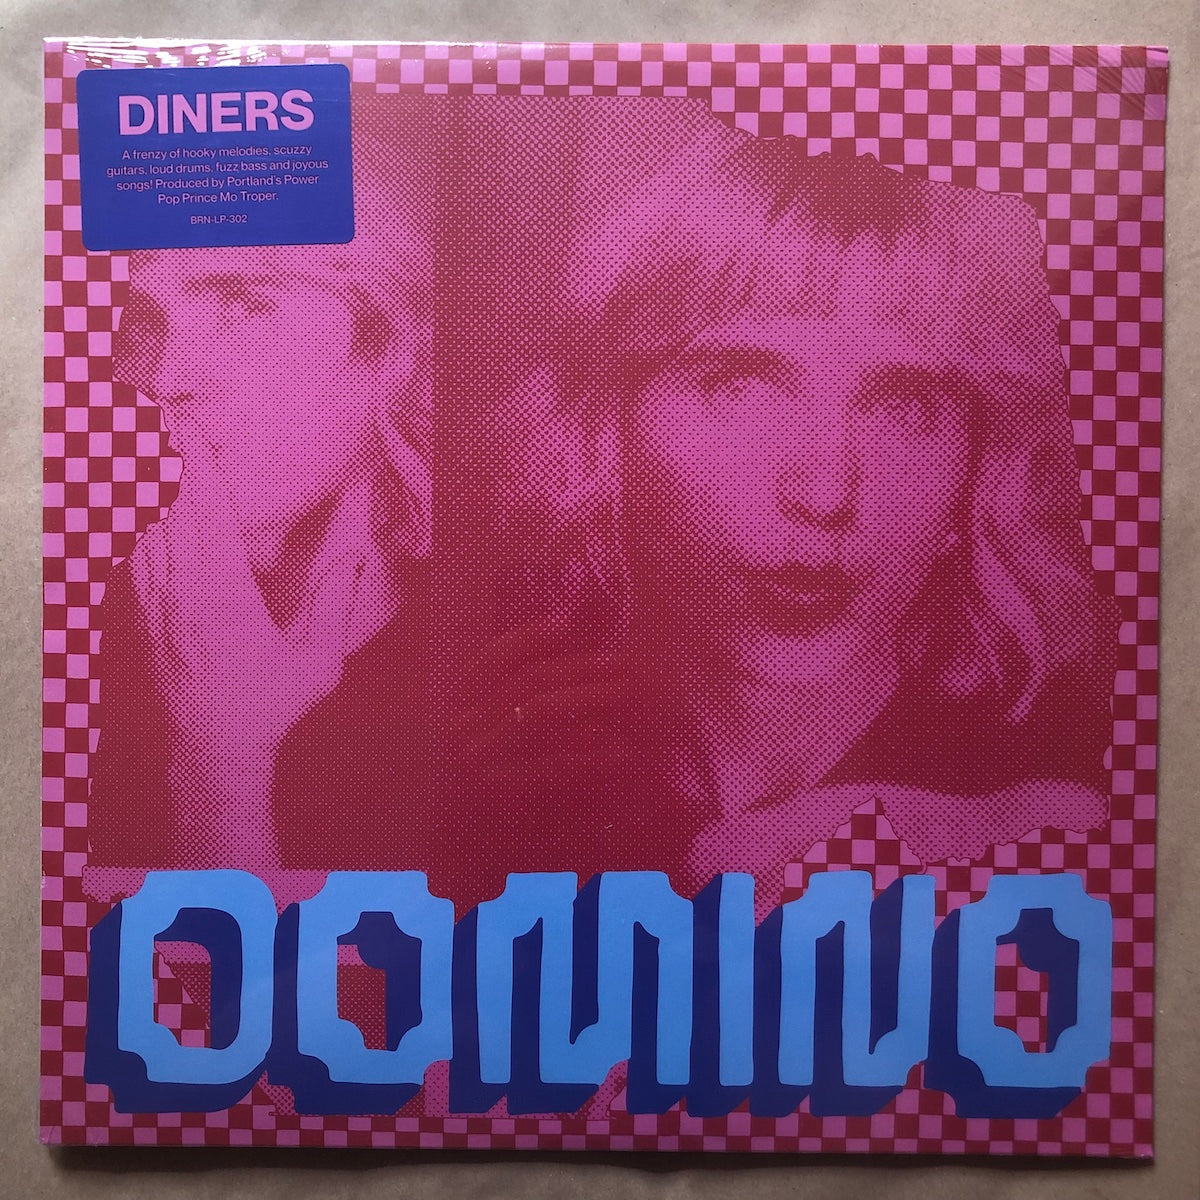 Domino: Vinyl LP